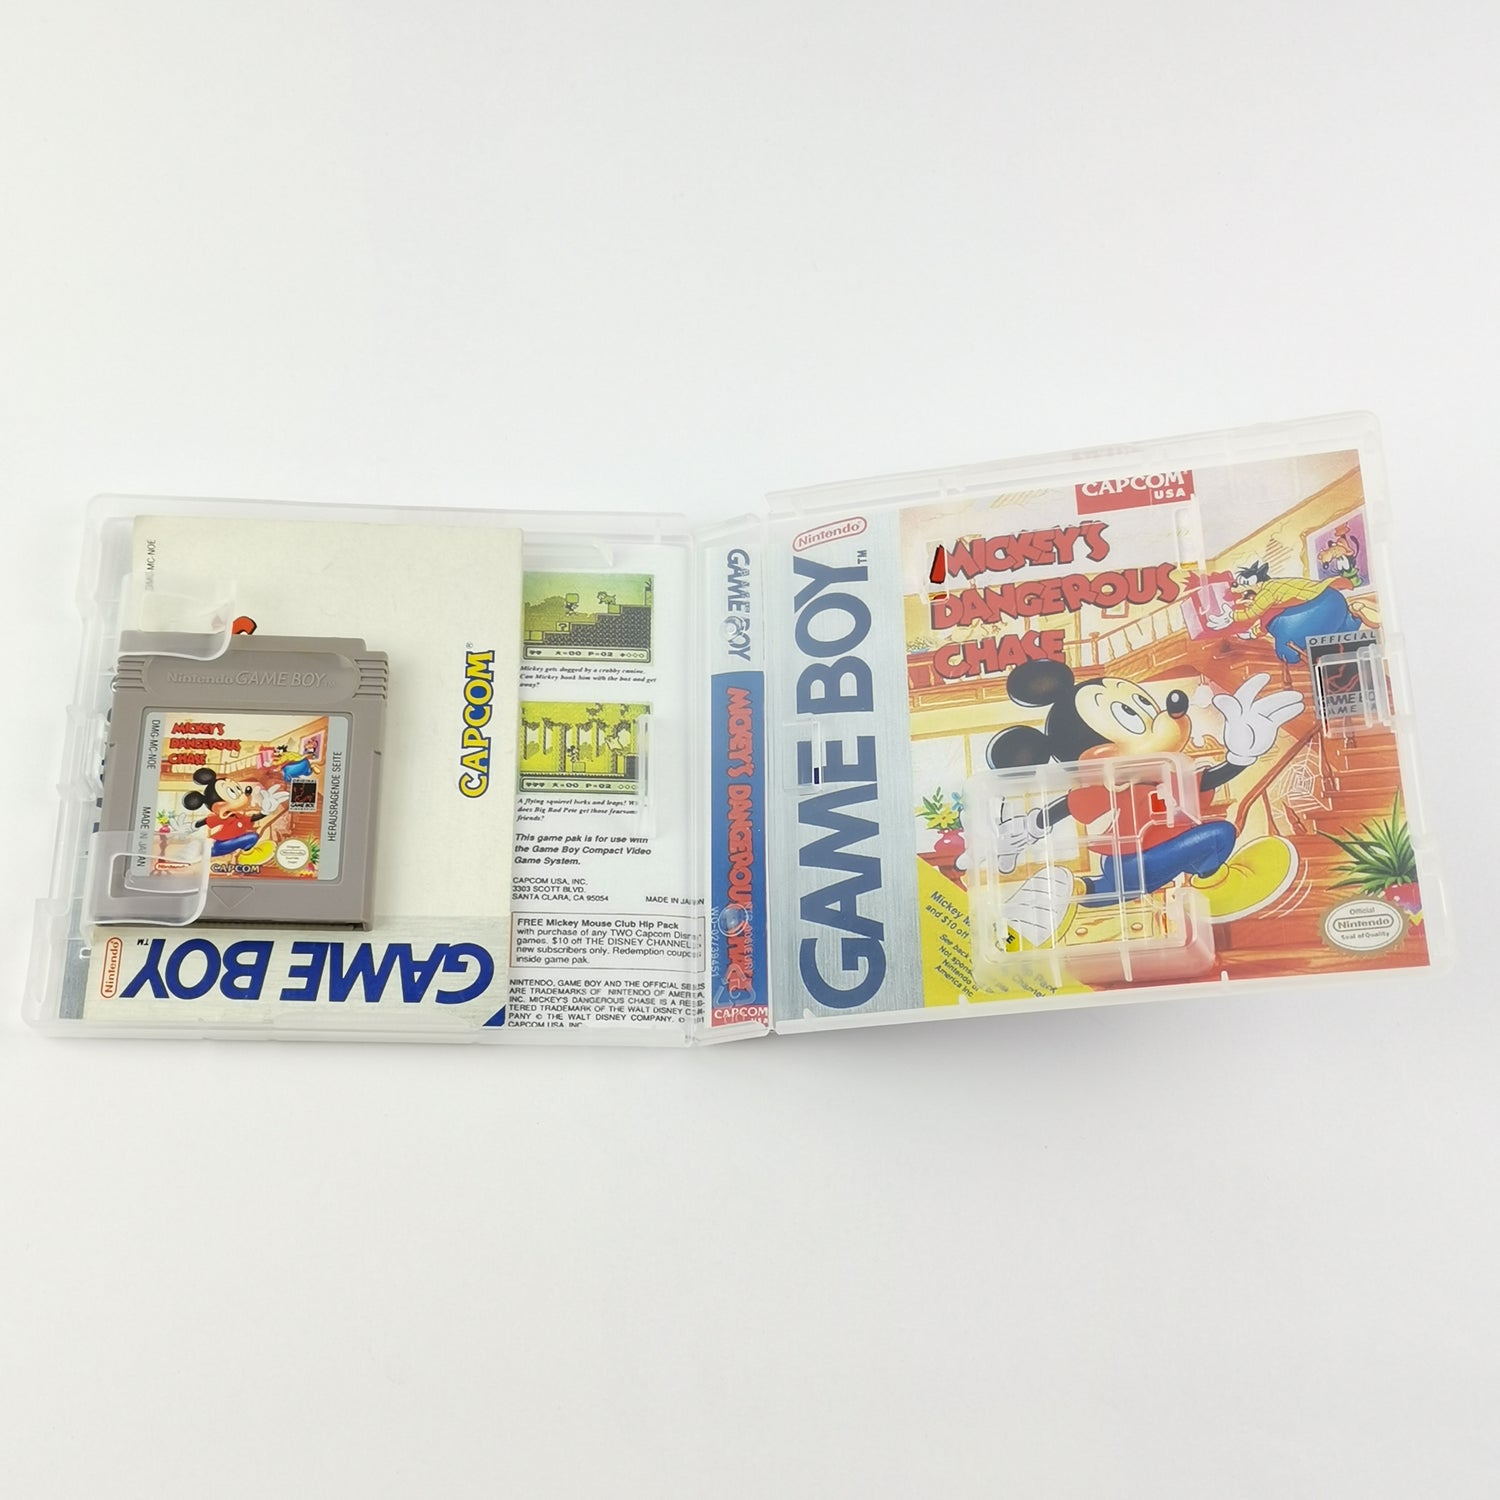 Nintendo Game Boy Classic Spiel : Mickeys Dangerous Chase - Modul + Anleitung GB